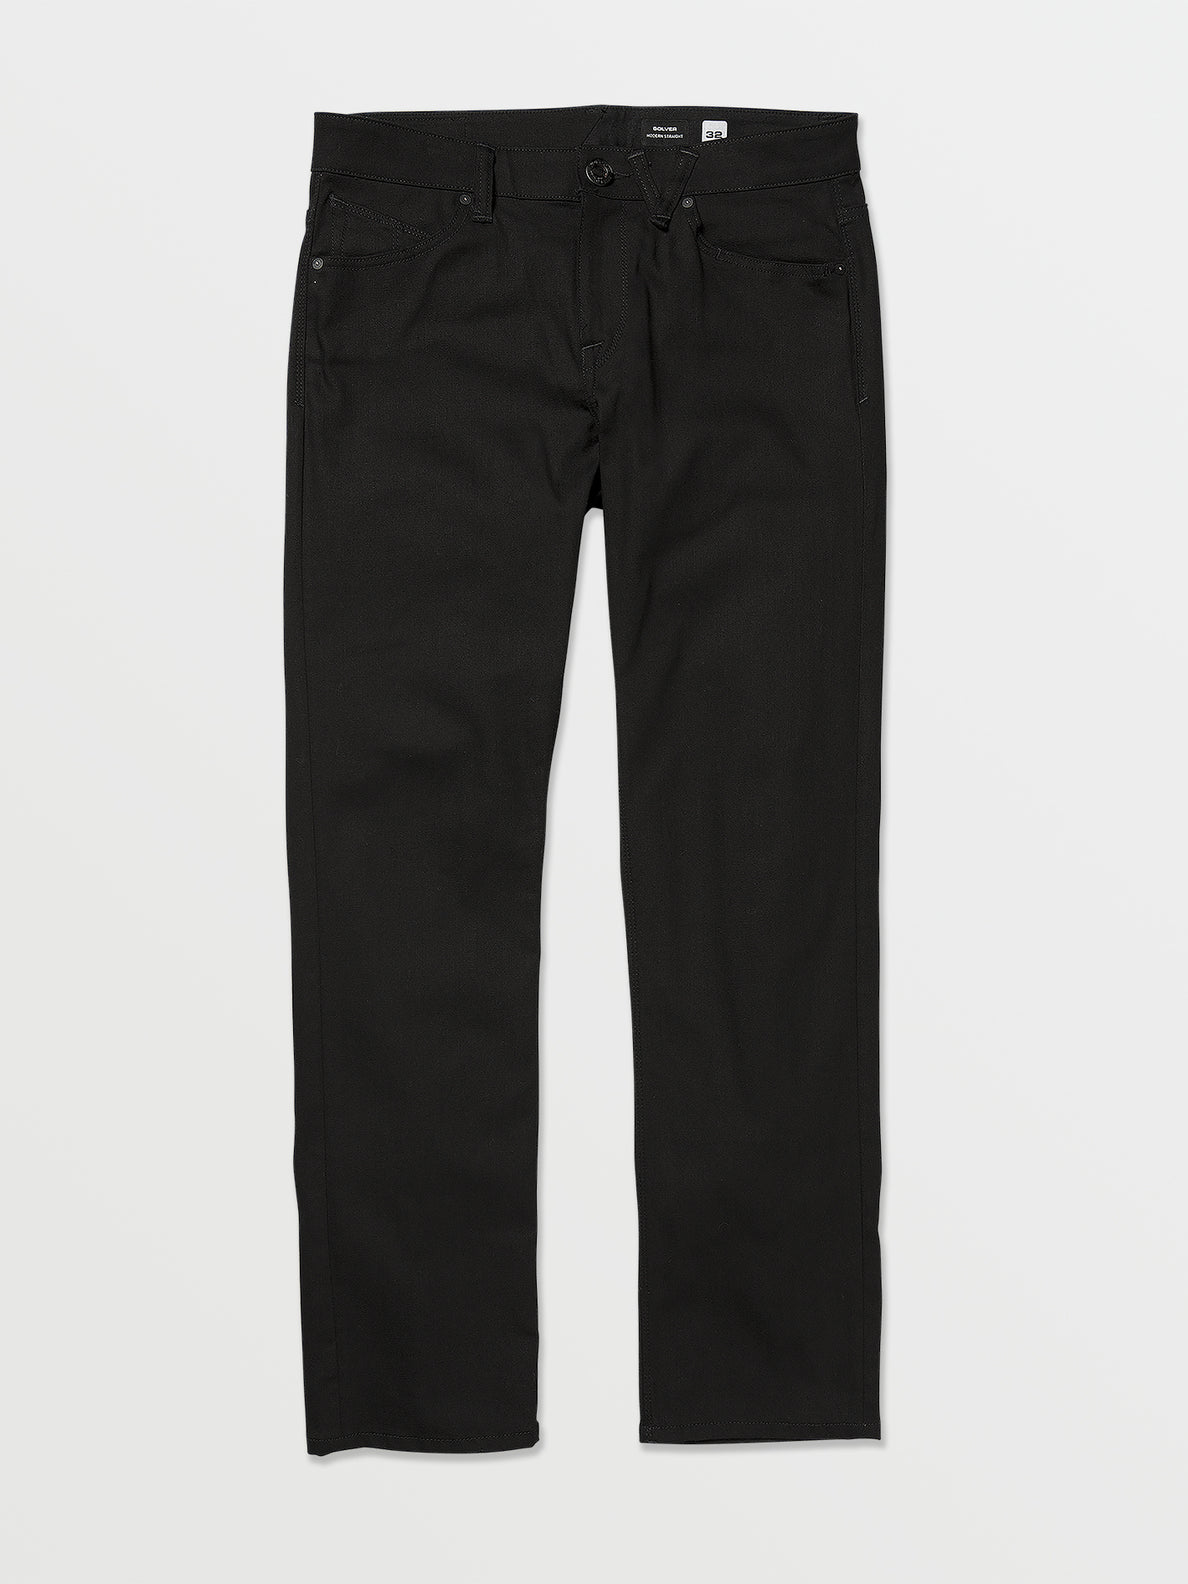 VOLCOM-Solver Jeans-BLACK ON BLACK